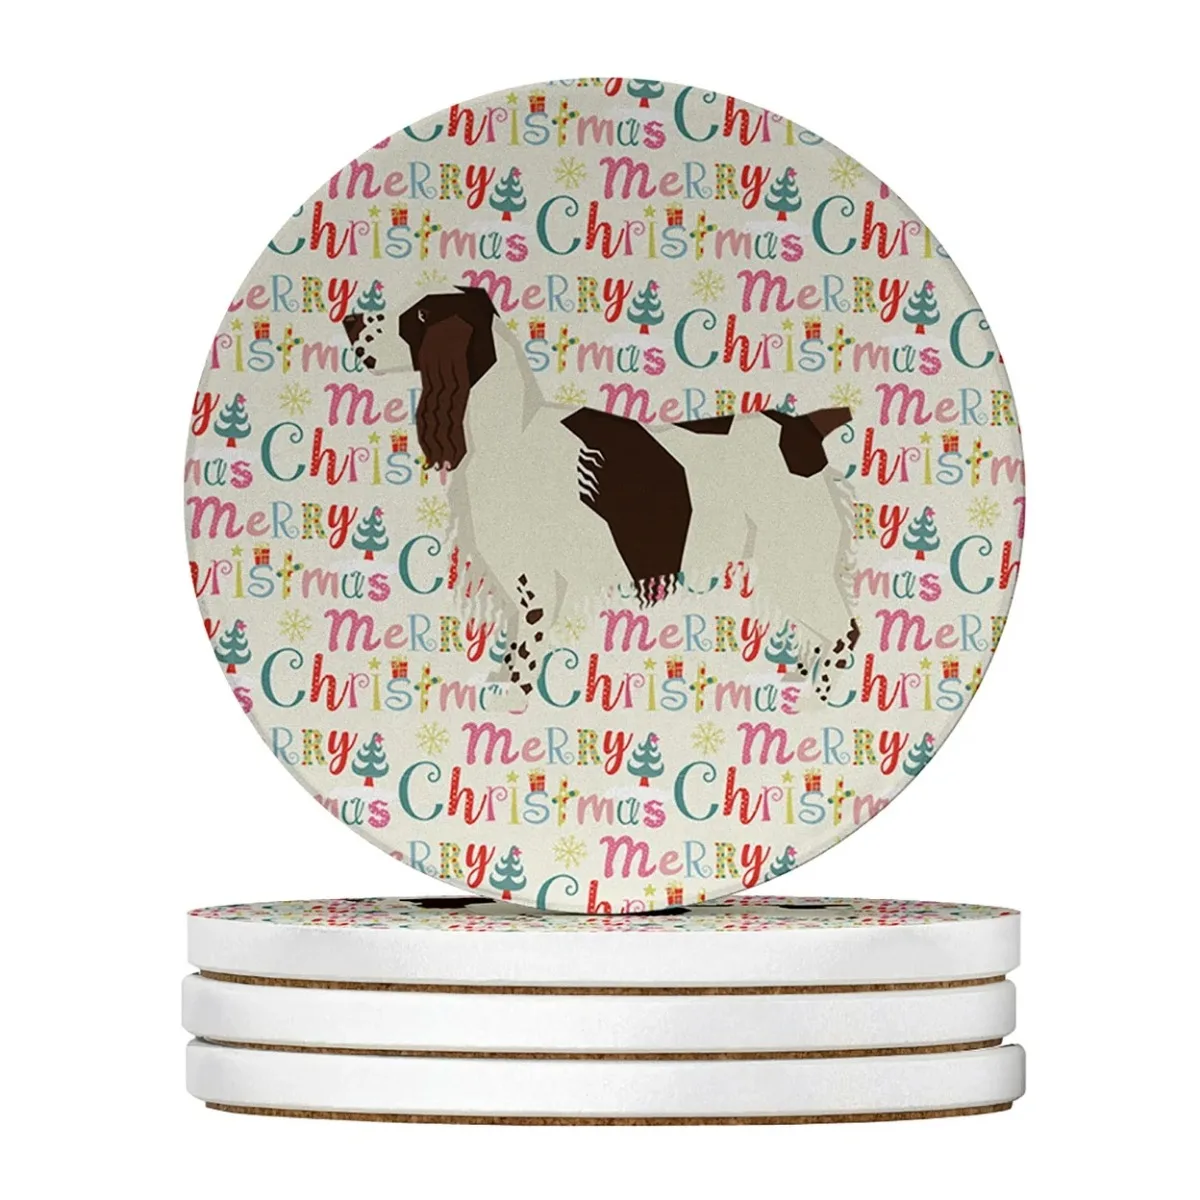 

Bedlington Terrier Merry Christmas Large Sandstone Coasters Pack of 4 4 in x 4 in